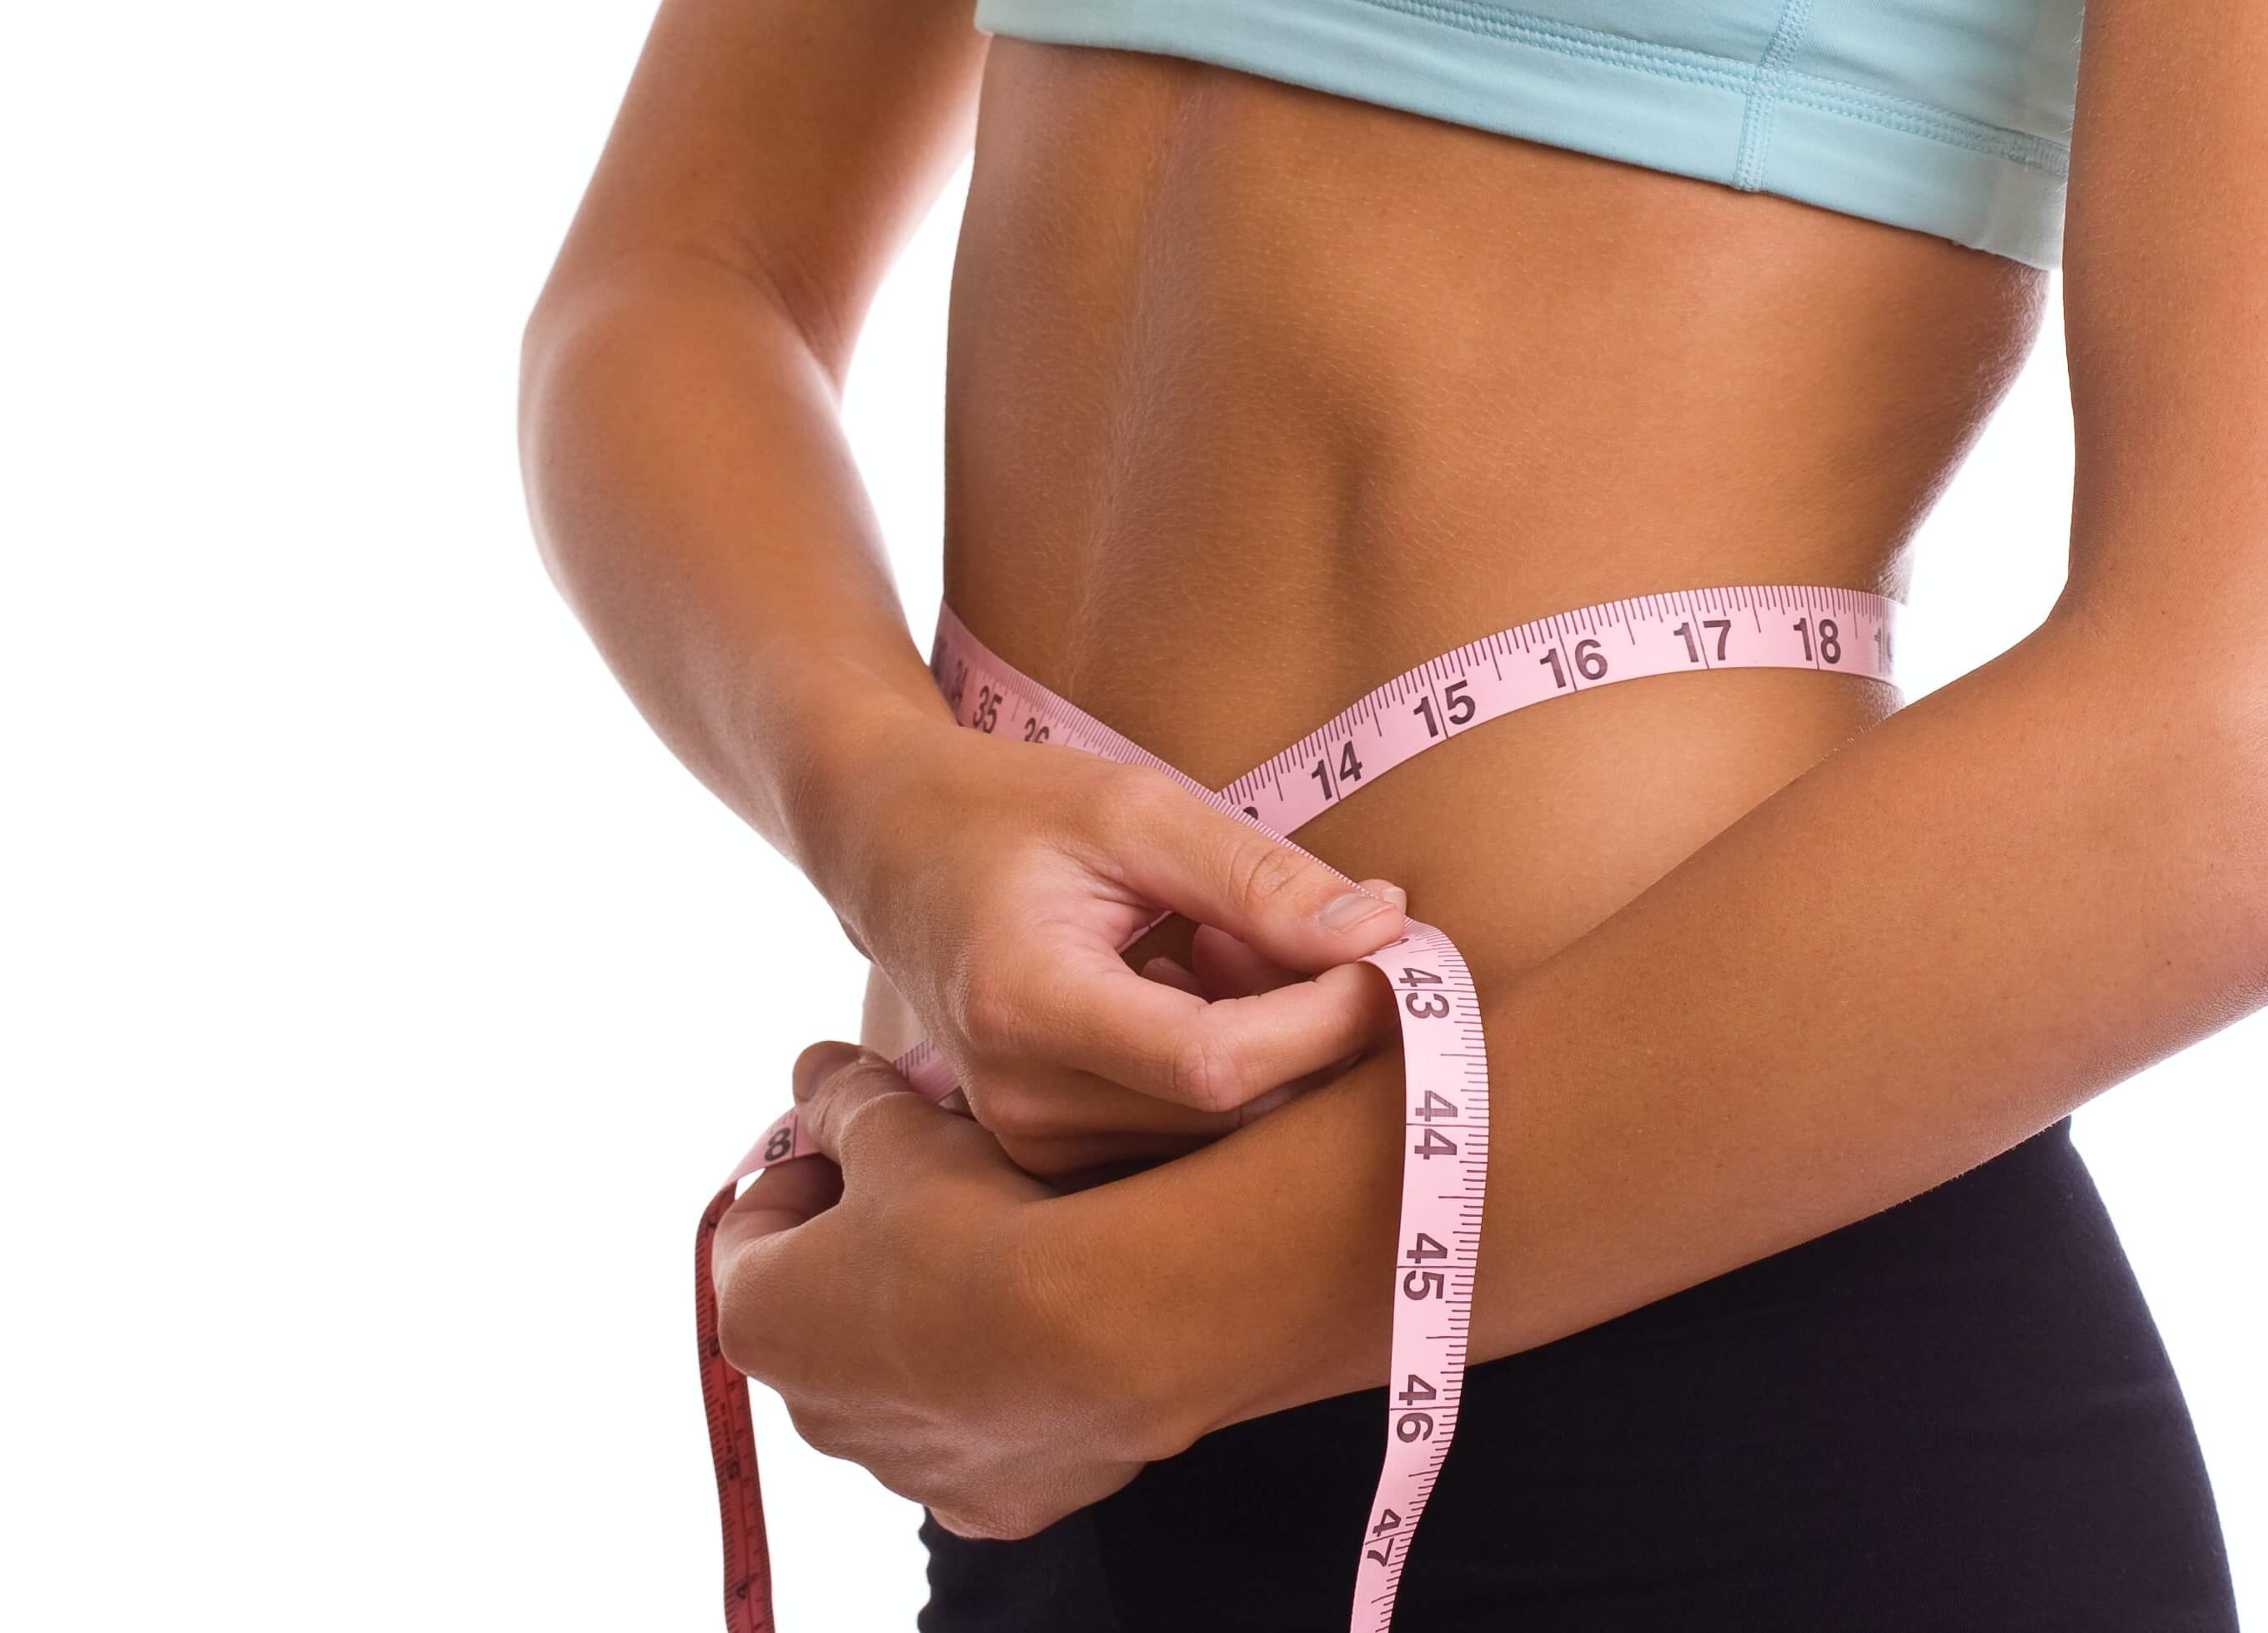 Do Natural Weight Loss Supplements Work?